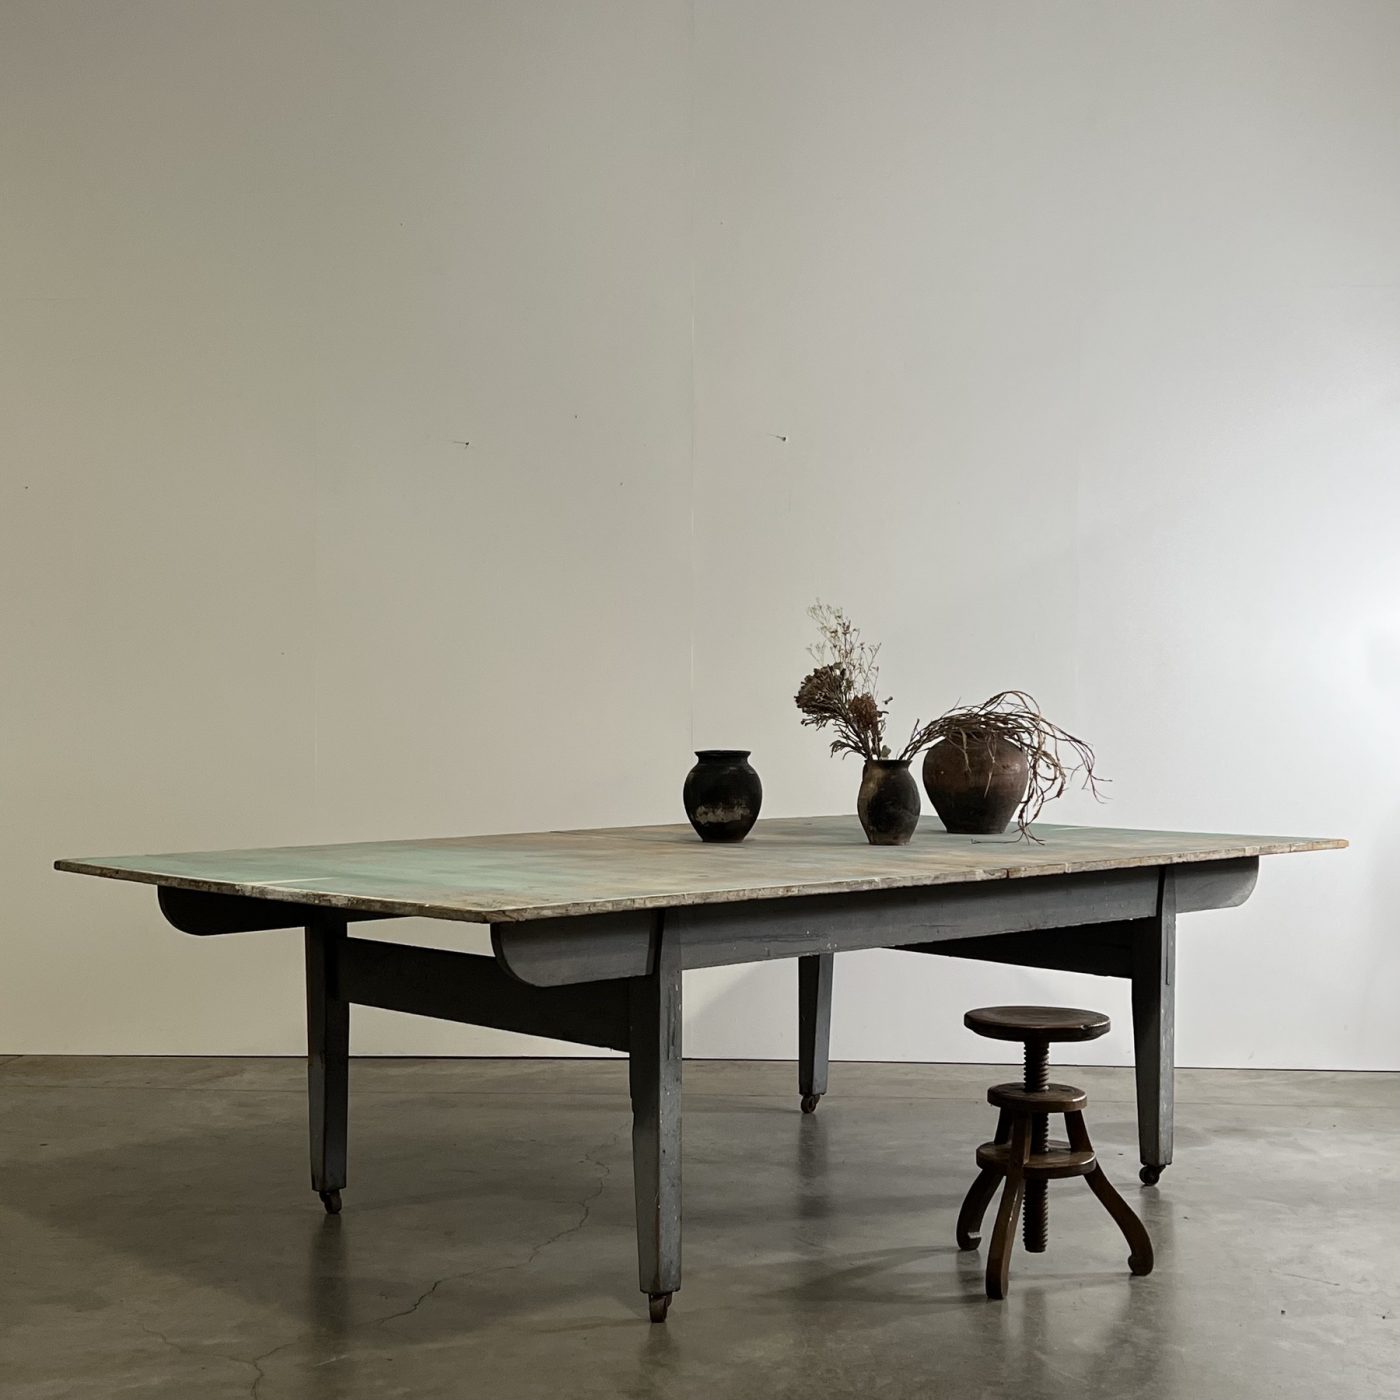 objet-vagabond-work-table0004